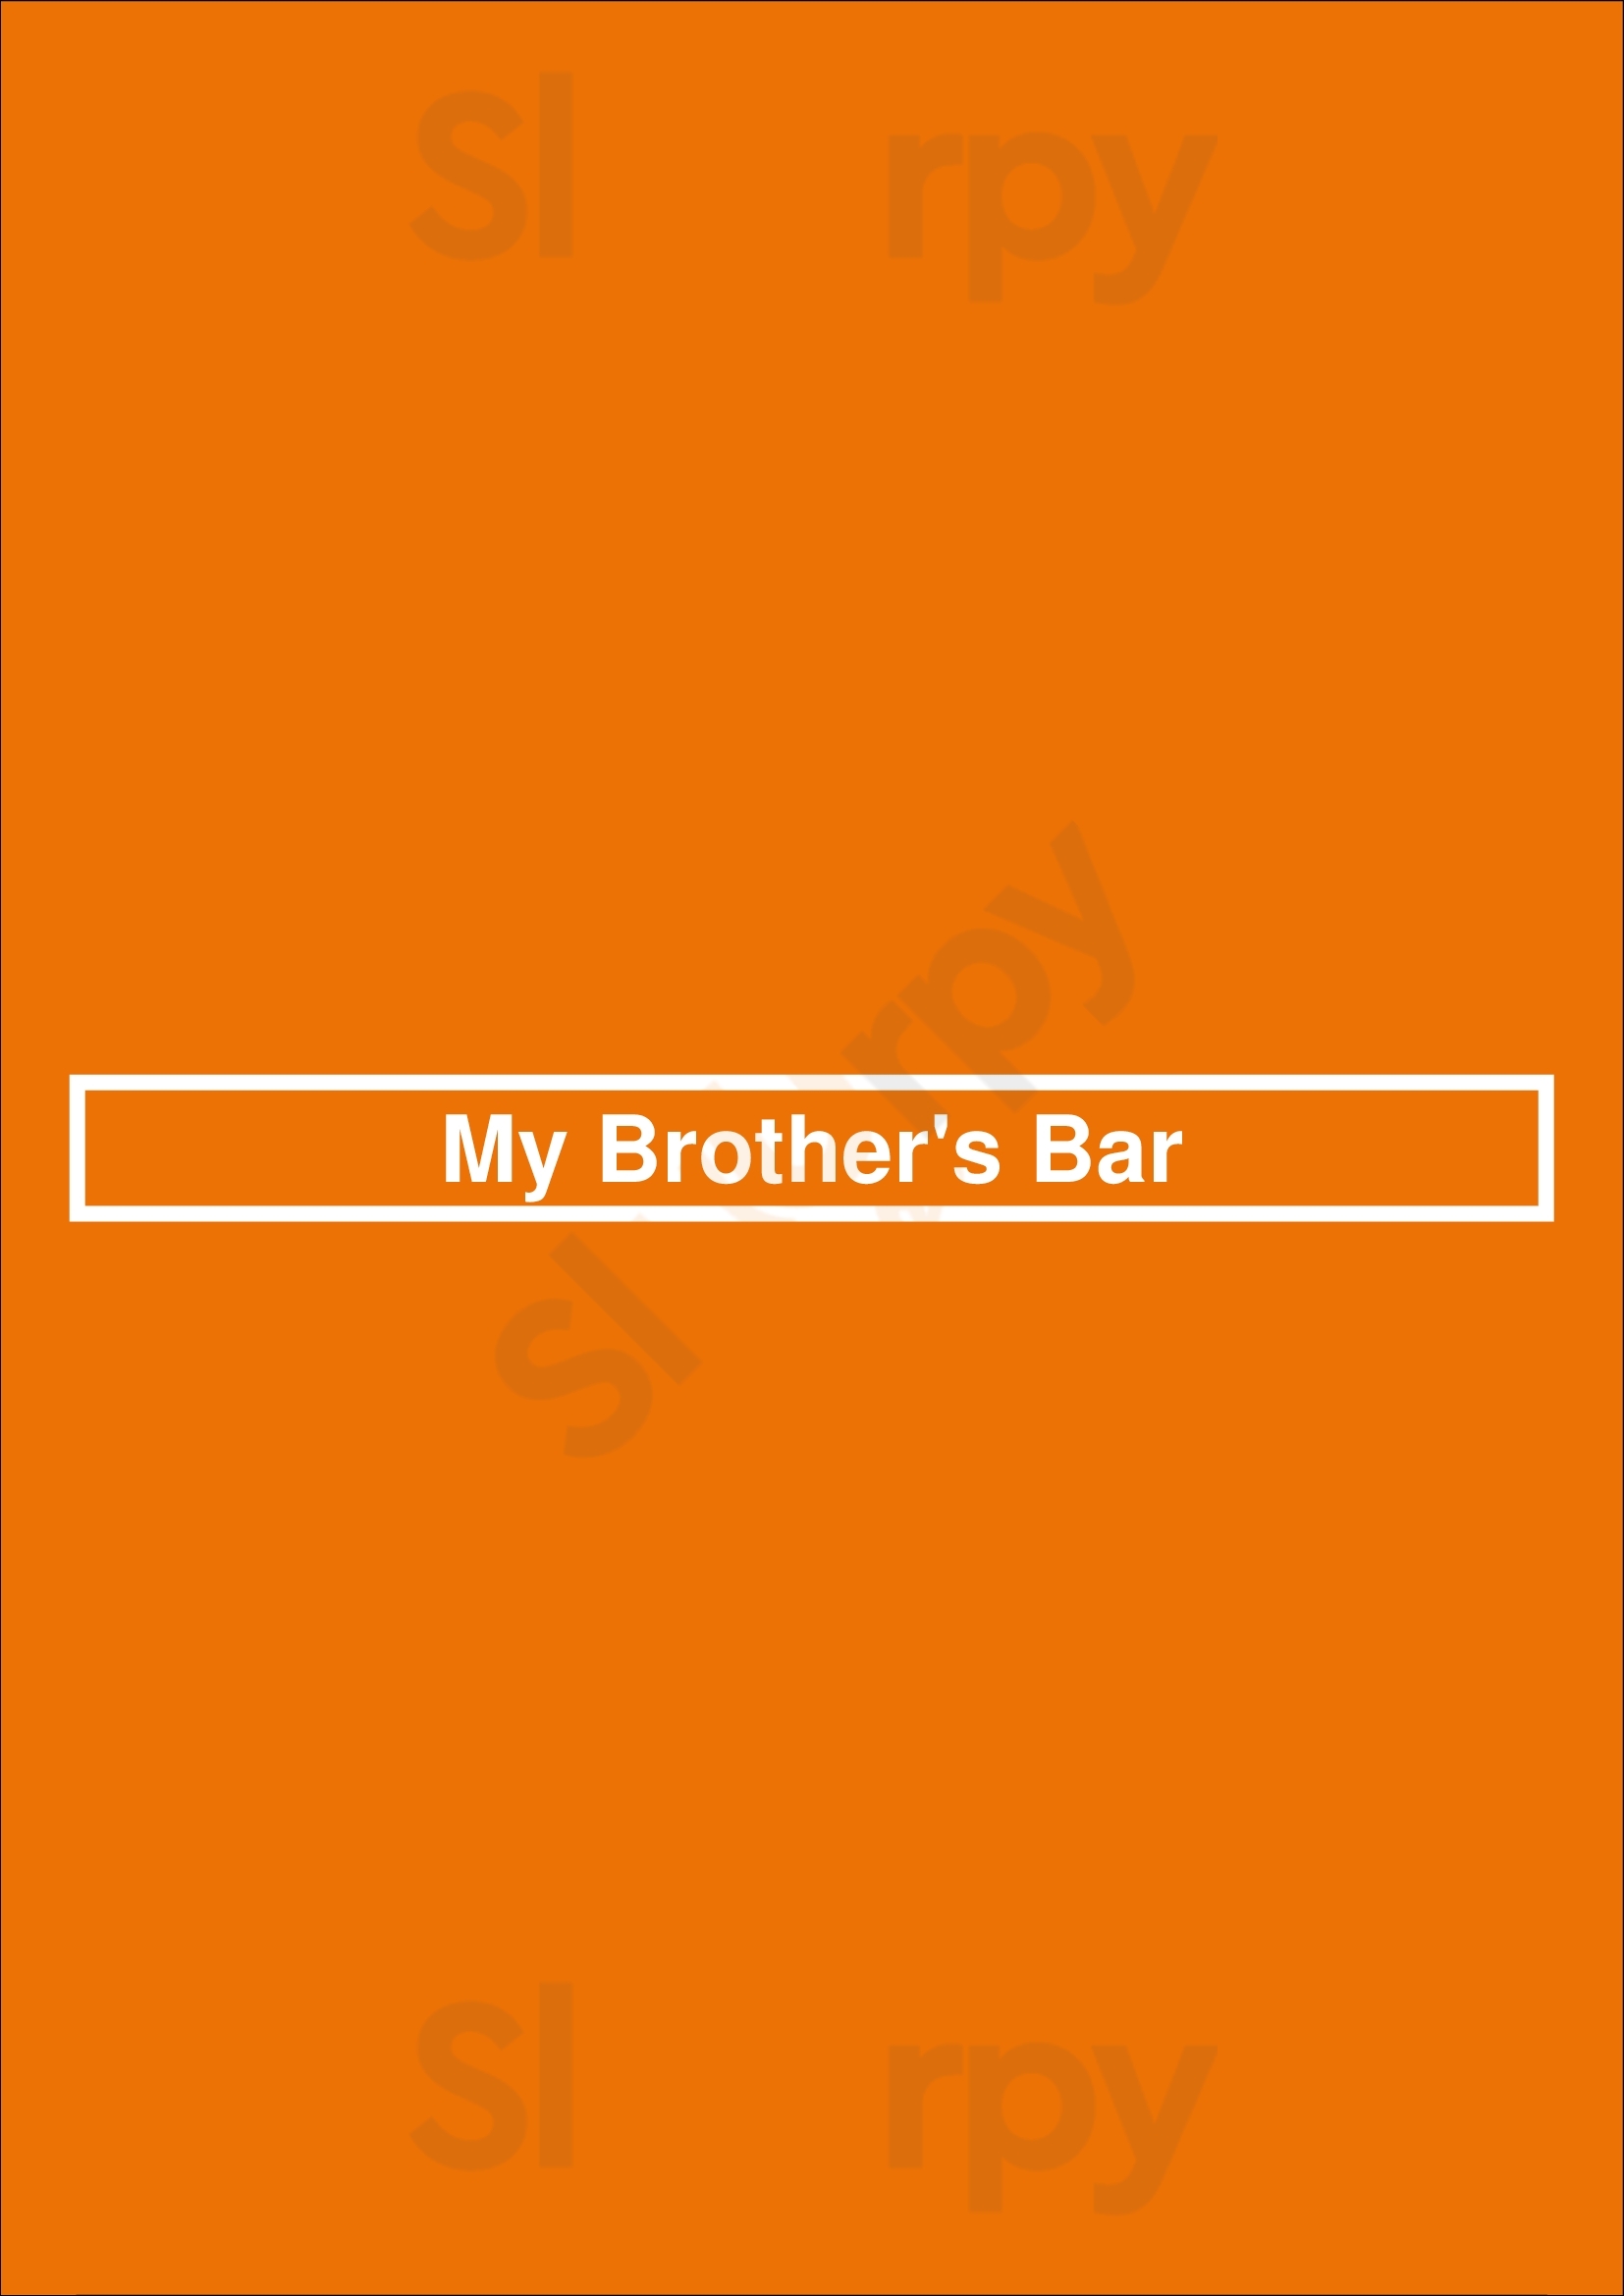 My Brother's Bar Denver Menu - 1